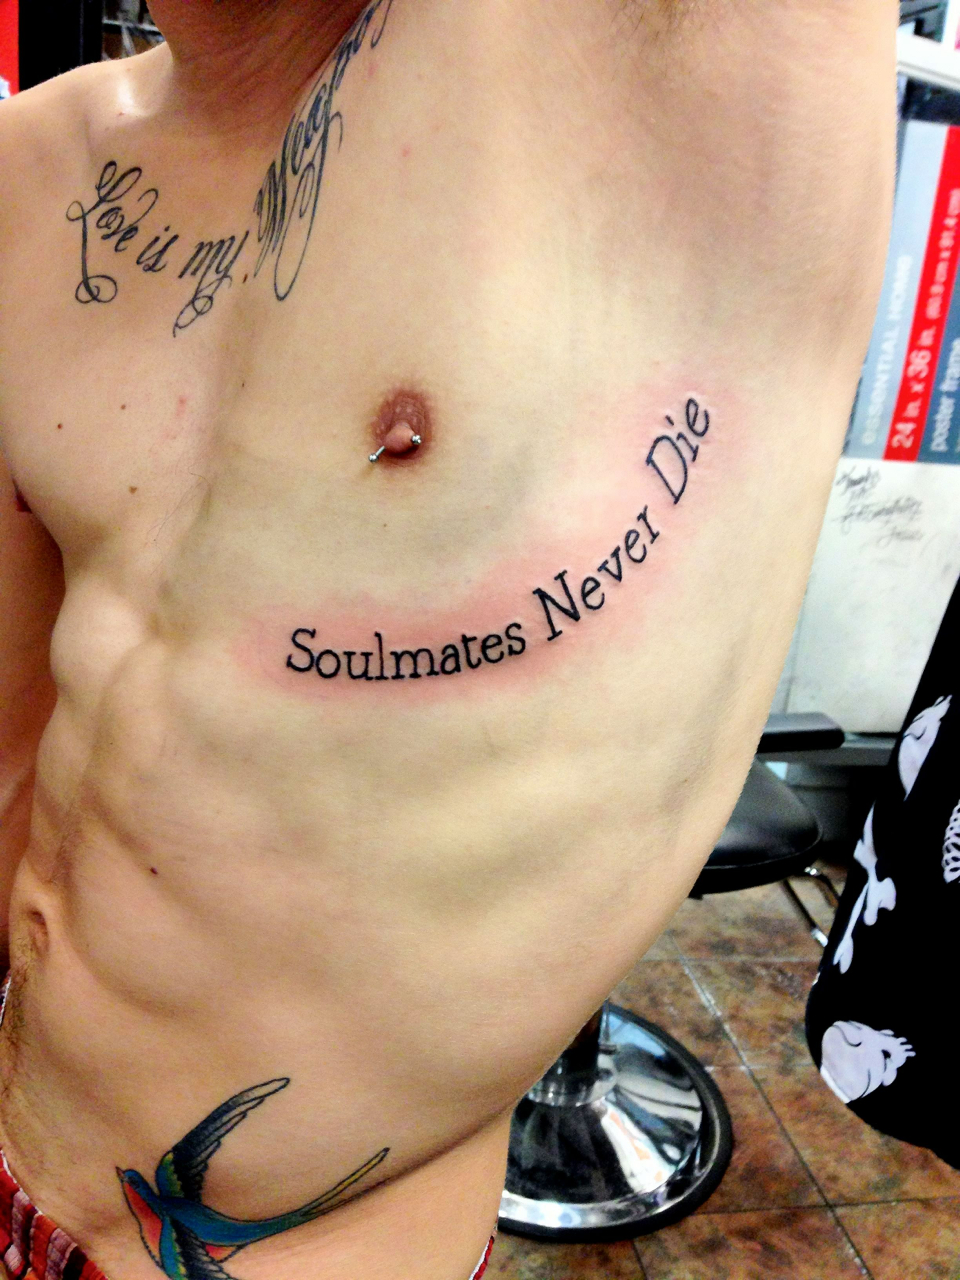 soulmates never die,word tattoo,words tattoos,cool tattoos.